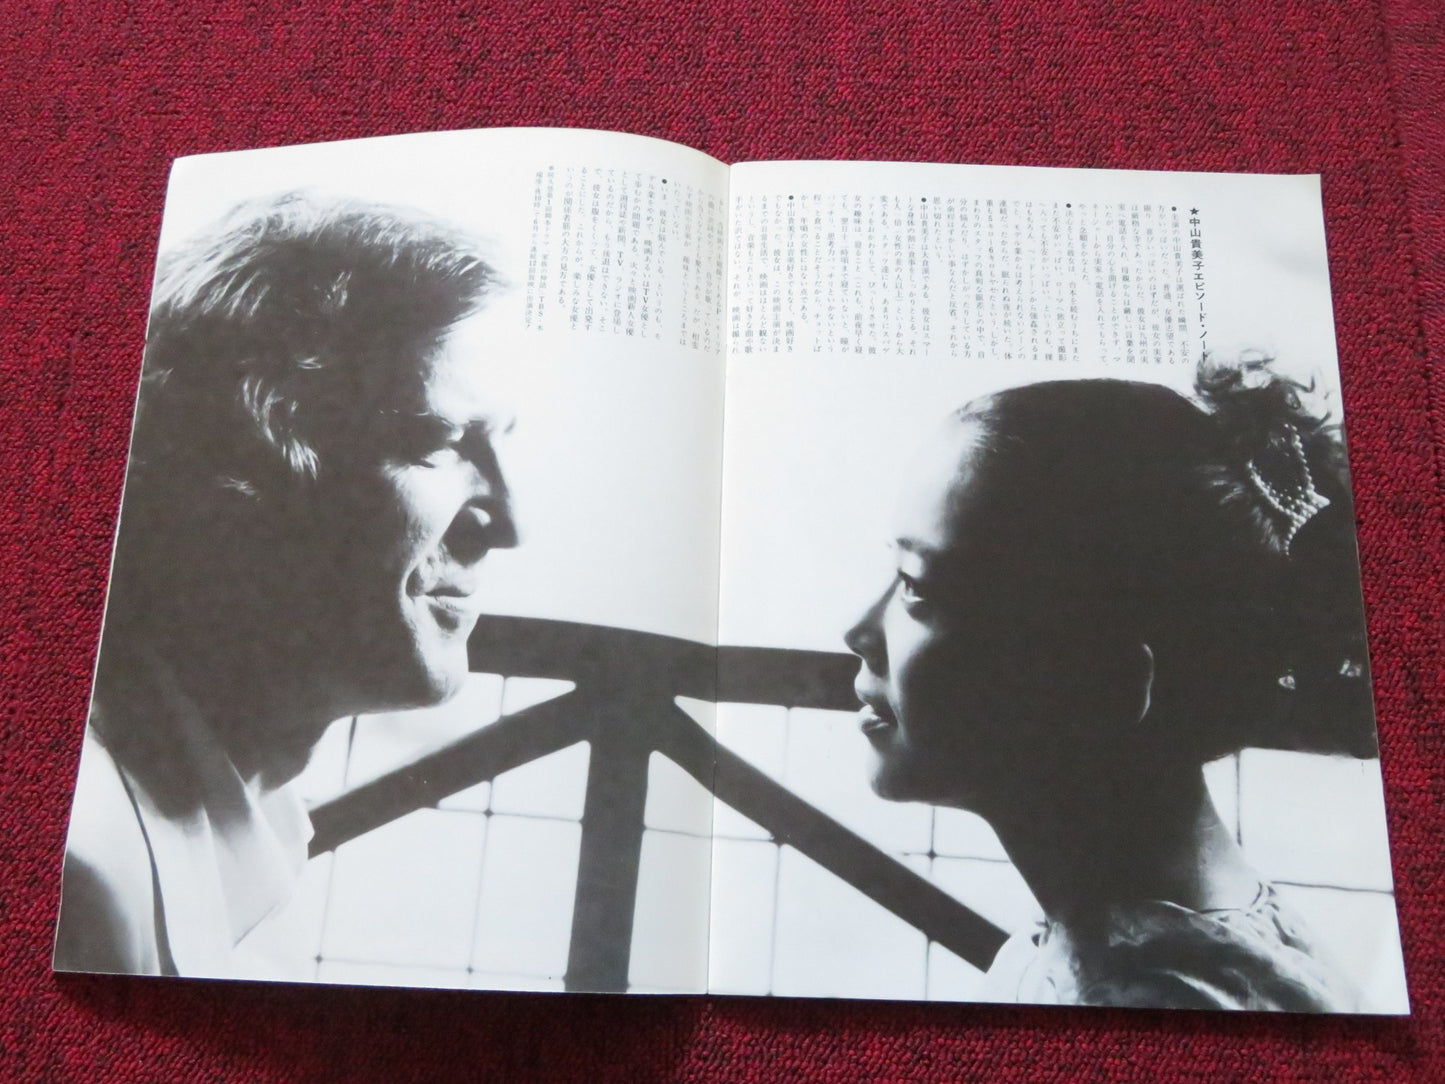 ROMA DALLA FINESTRA JAPANESE BROCHURE / PRESS BOOK MASUO IKEDA 1982